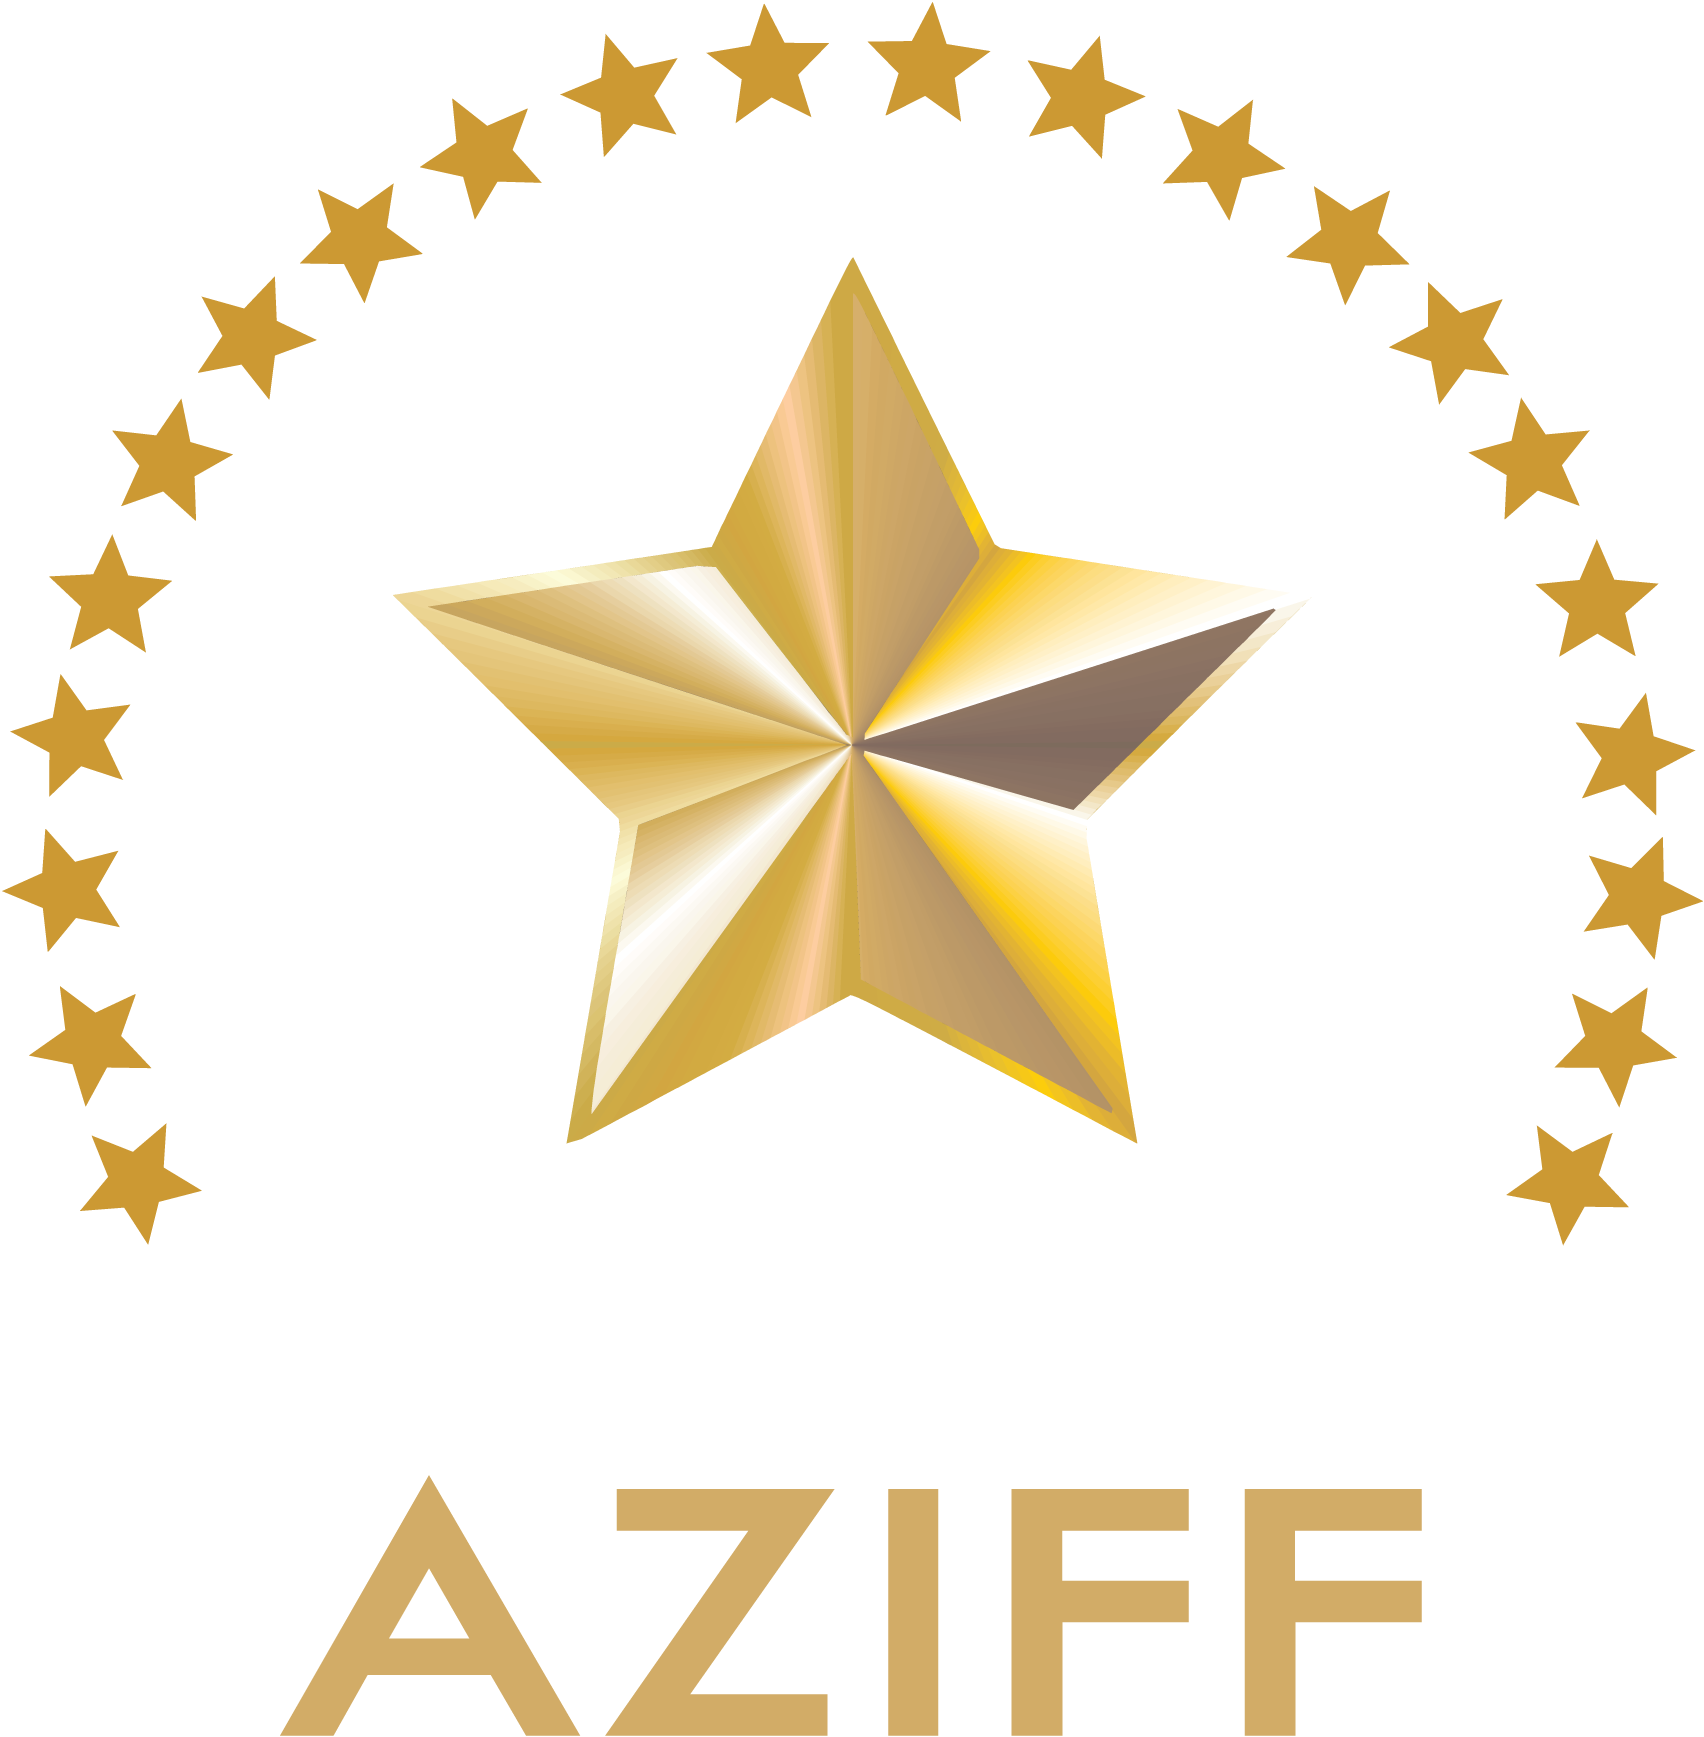 AZIFF_logo.png - 265.52 KB